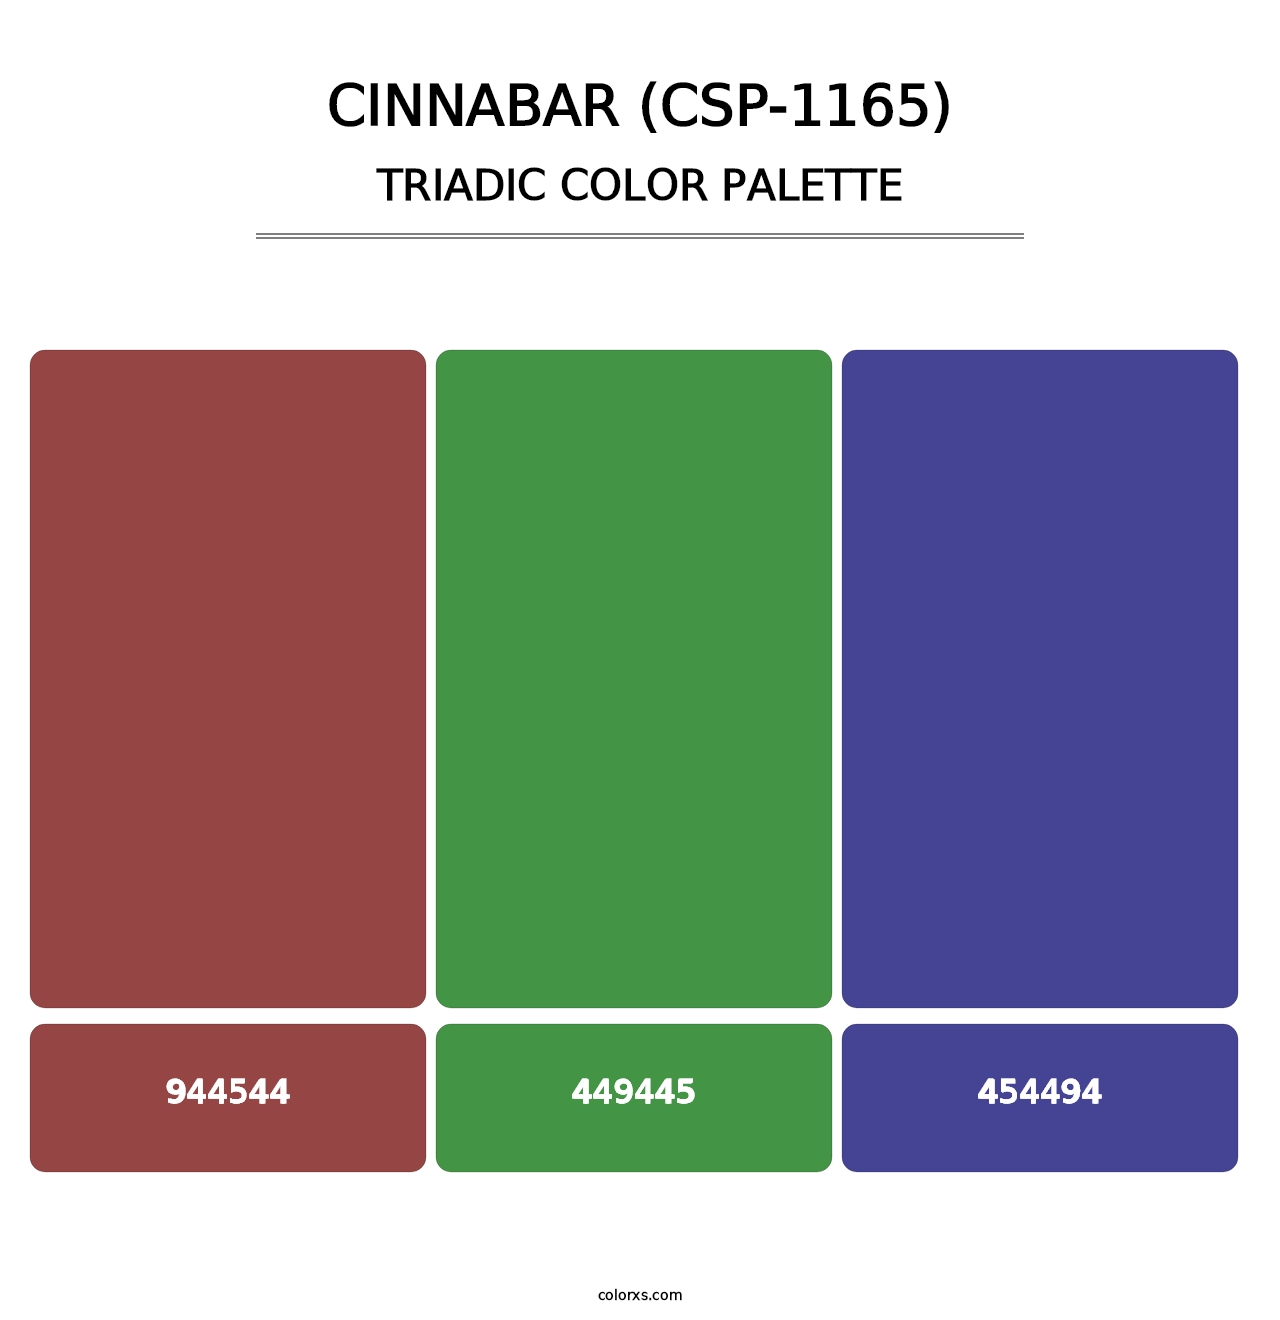 Cinnabar (CSP-1165) - Triadic Color Palette